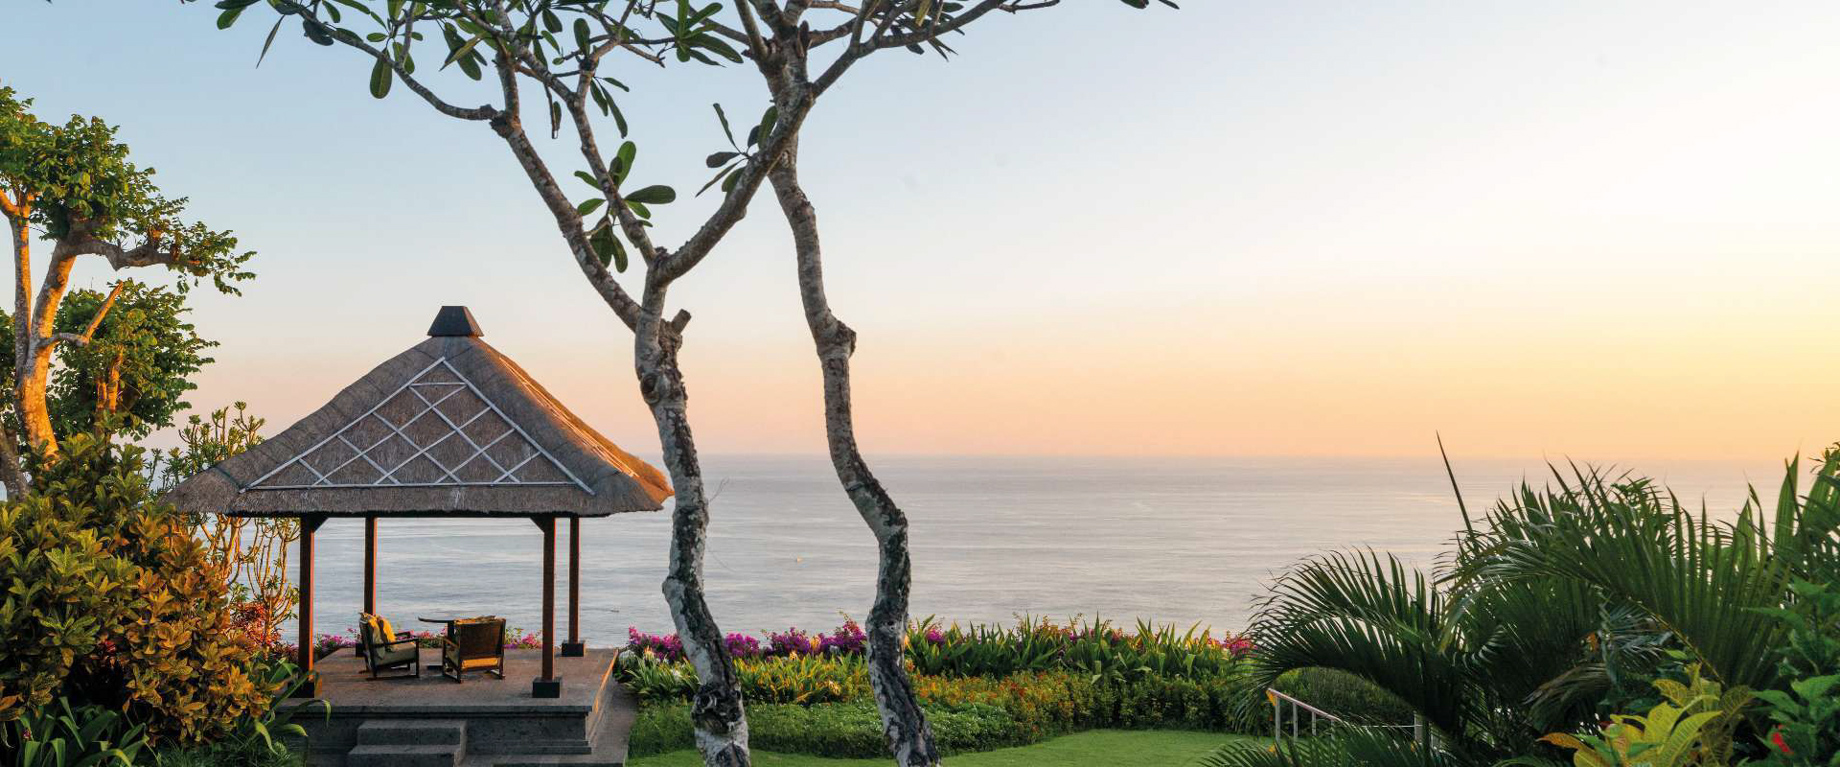 Bvlgari Resort Bali – Uluwatu, Bali, Indonesia – The Bvlgari Villa Garden Deck Ocean View Twilight